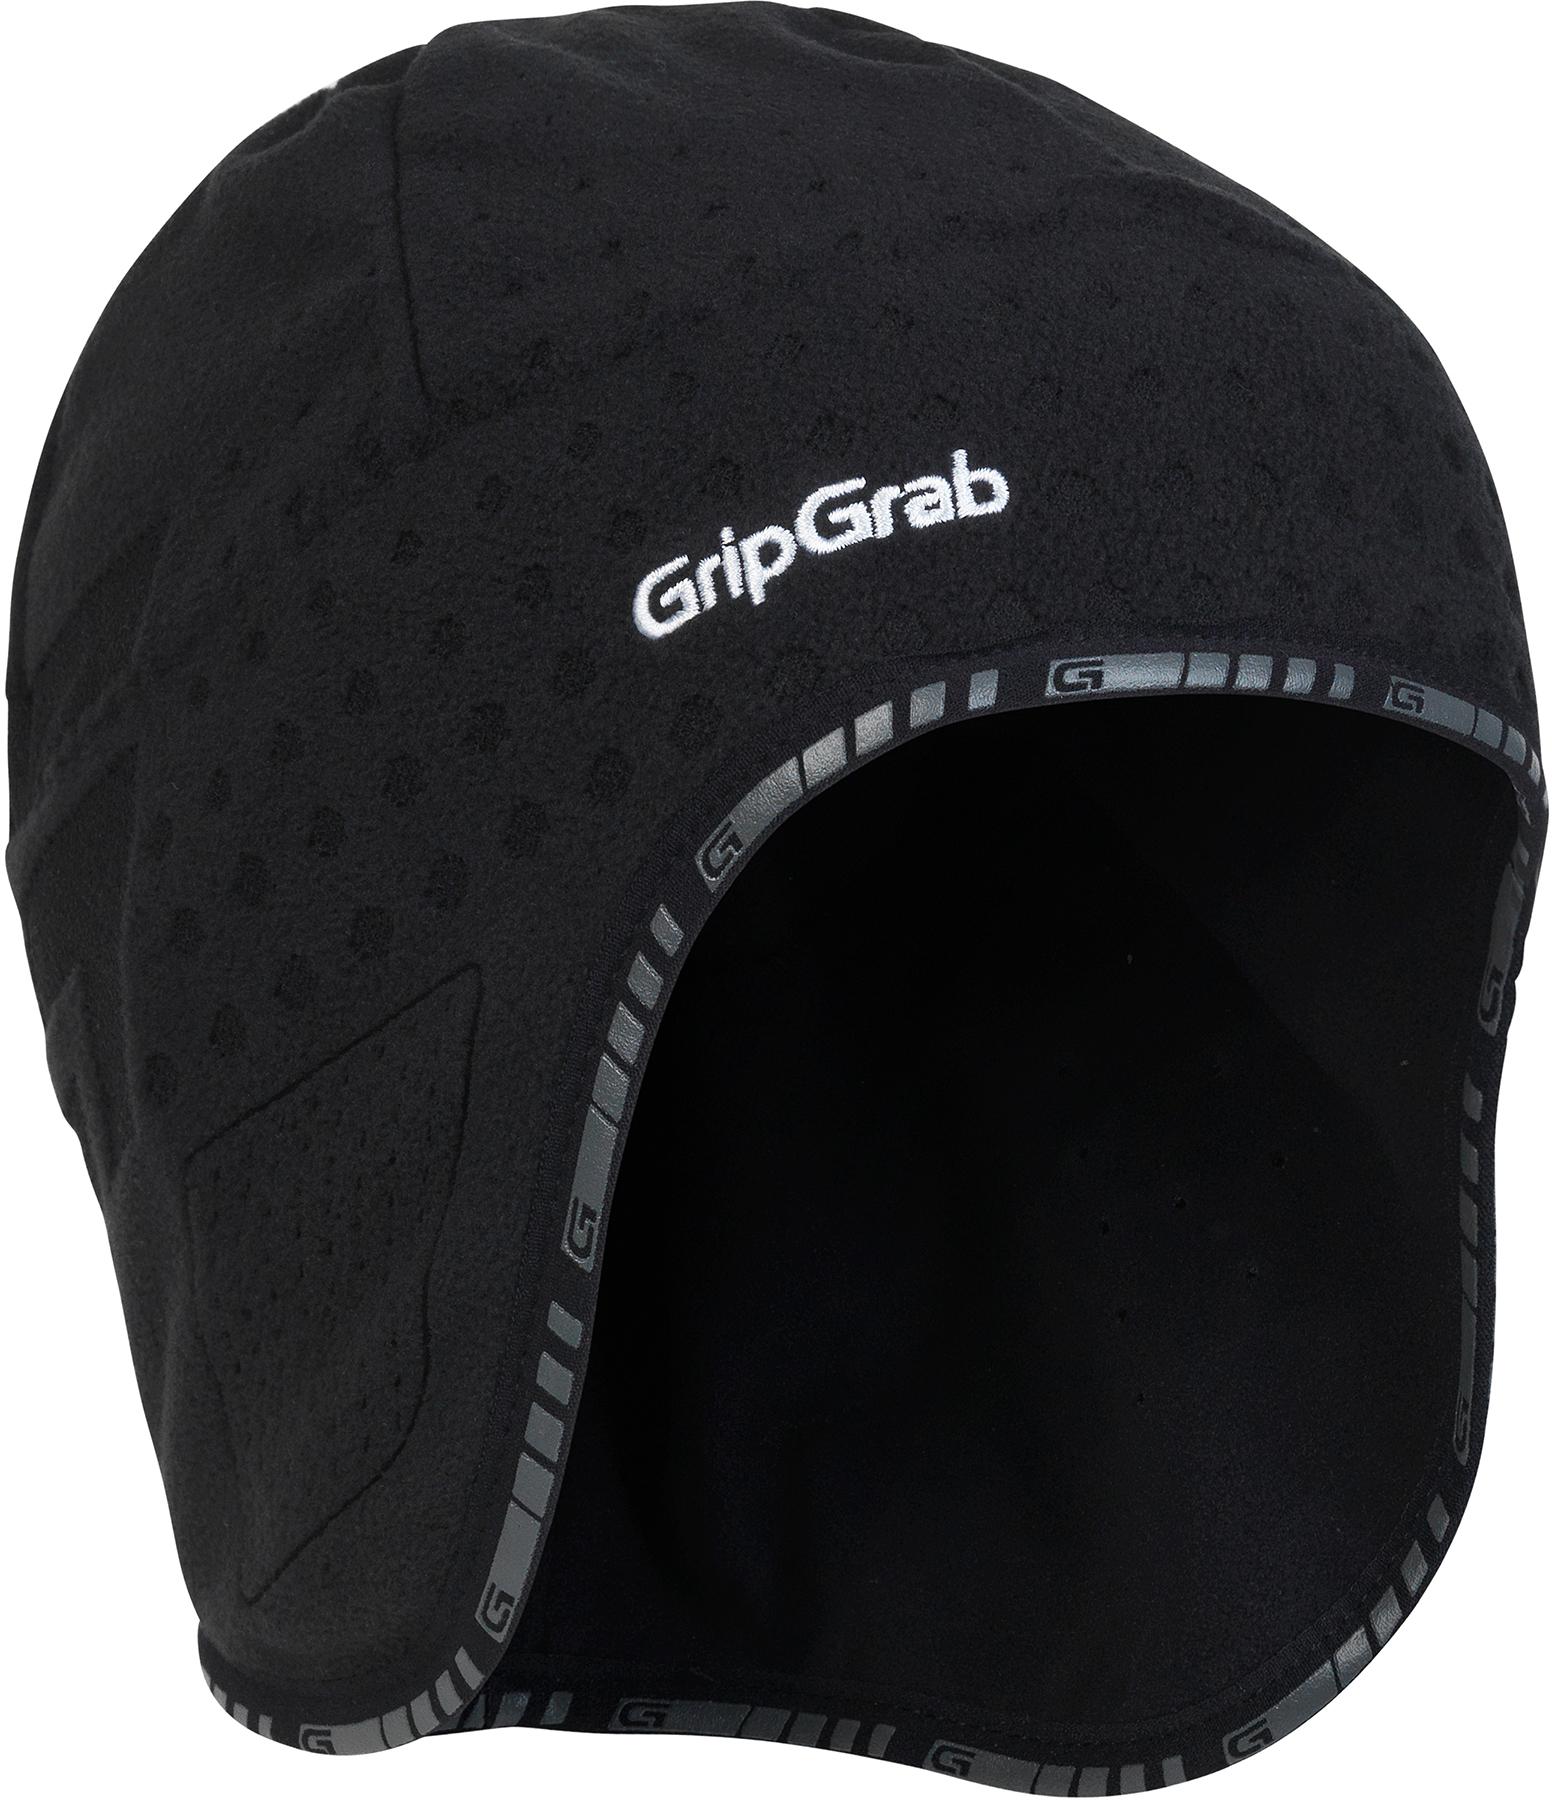 Gripgrab Aviator Windproof Thermal Skull Cap - Black